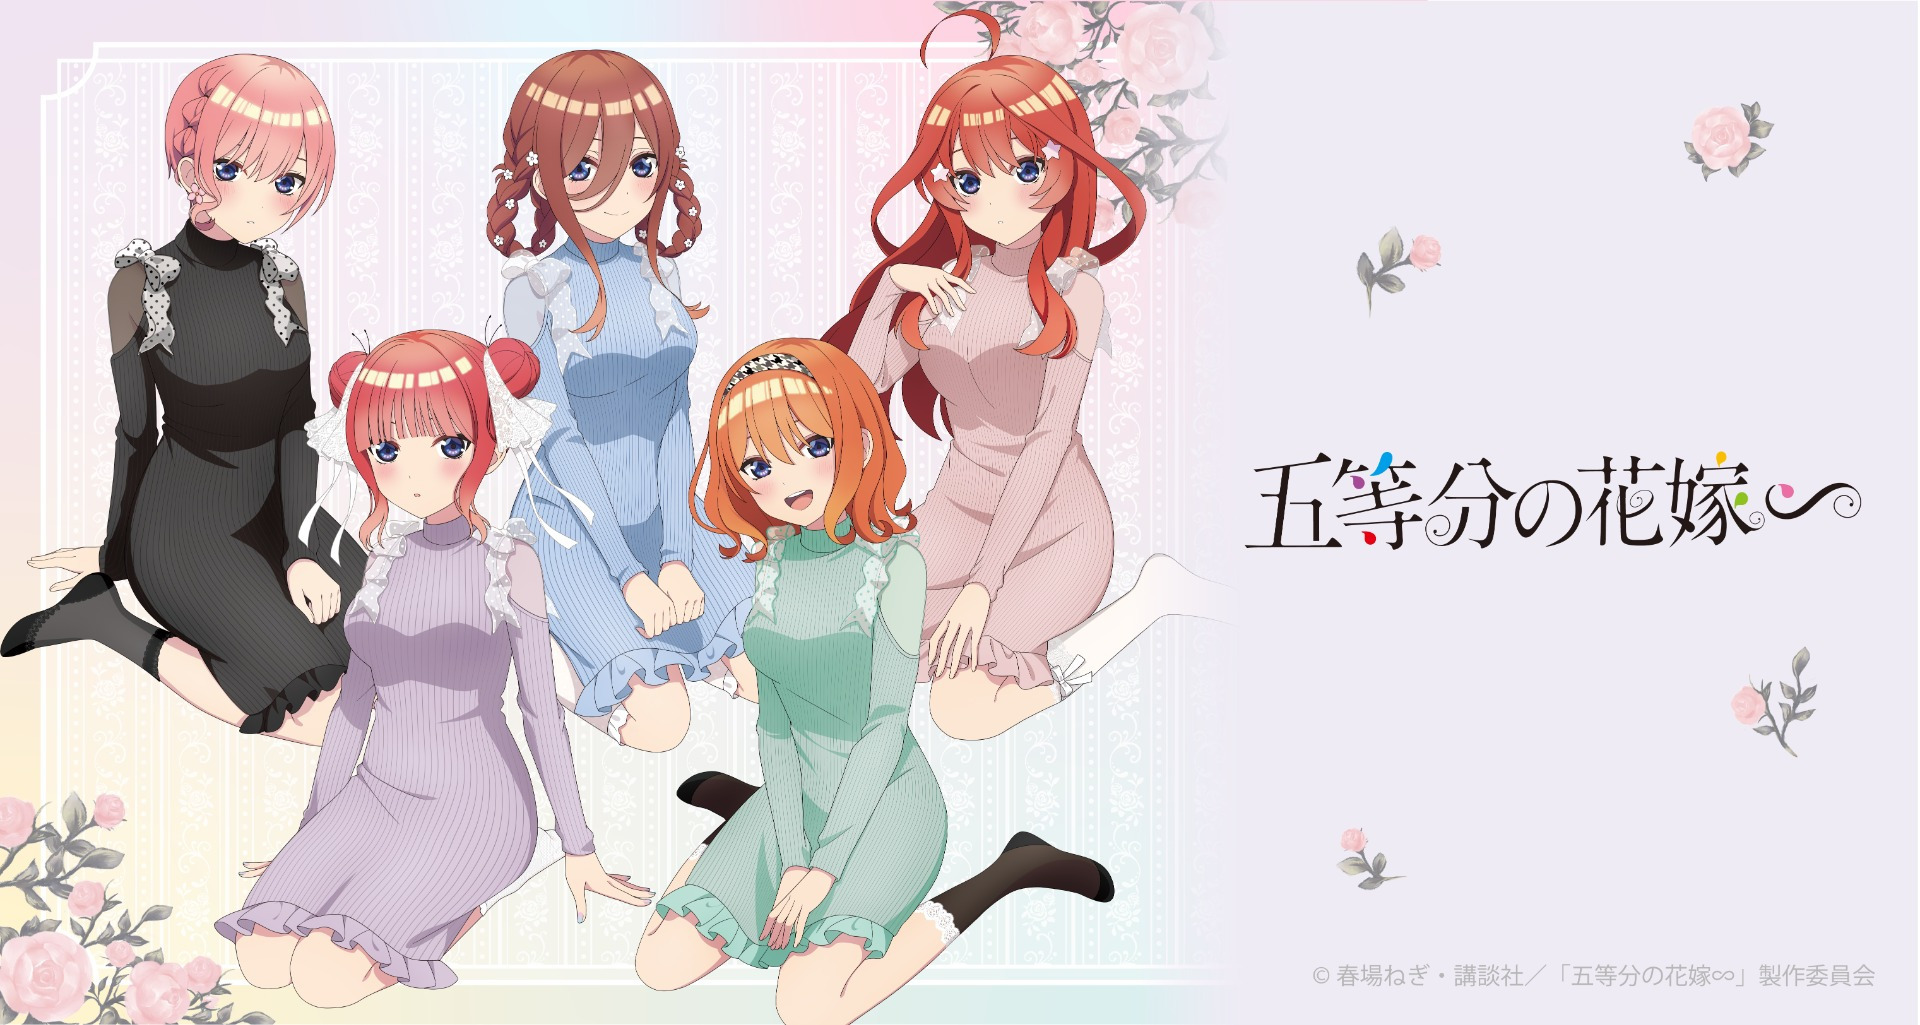 TVスペシャルアニメ「五等分の花嫁∽」描き下ろしイラストのアイテムが登場！